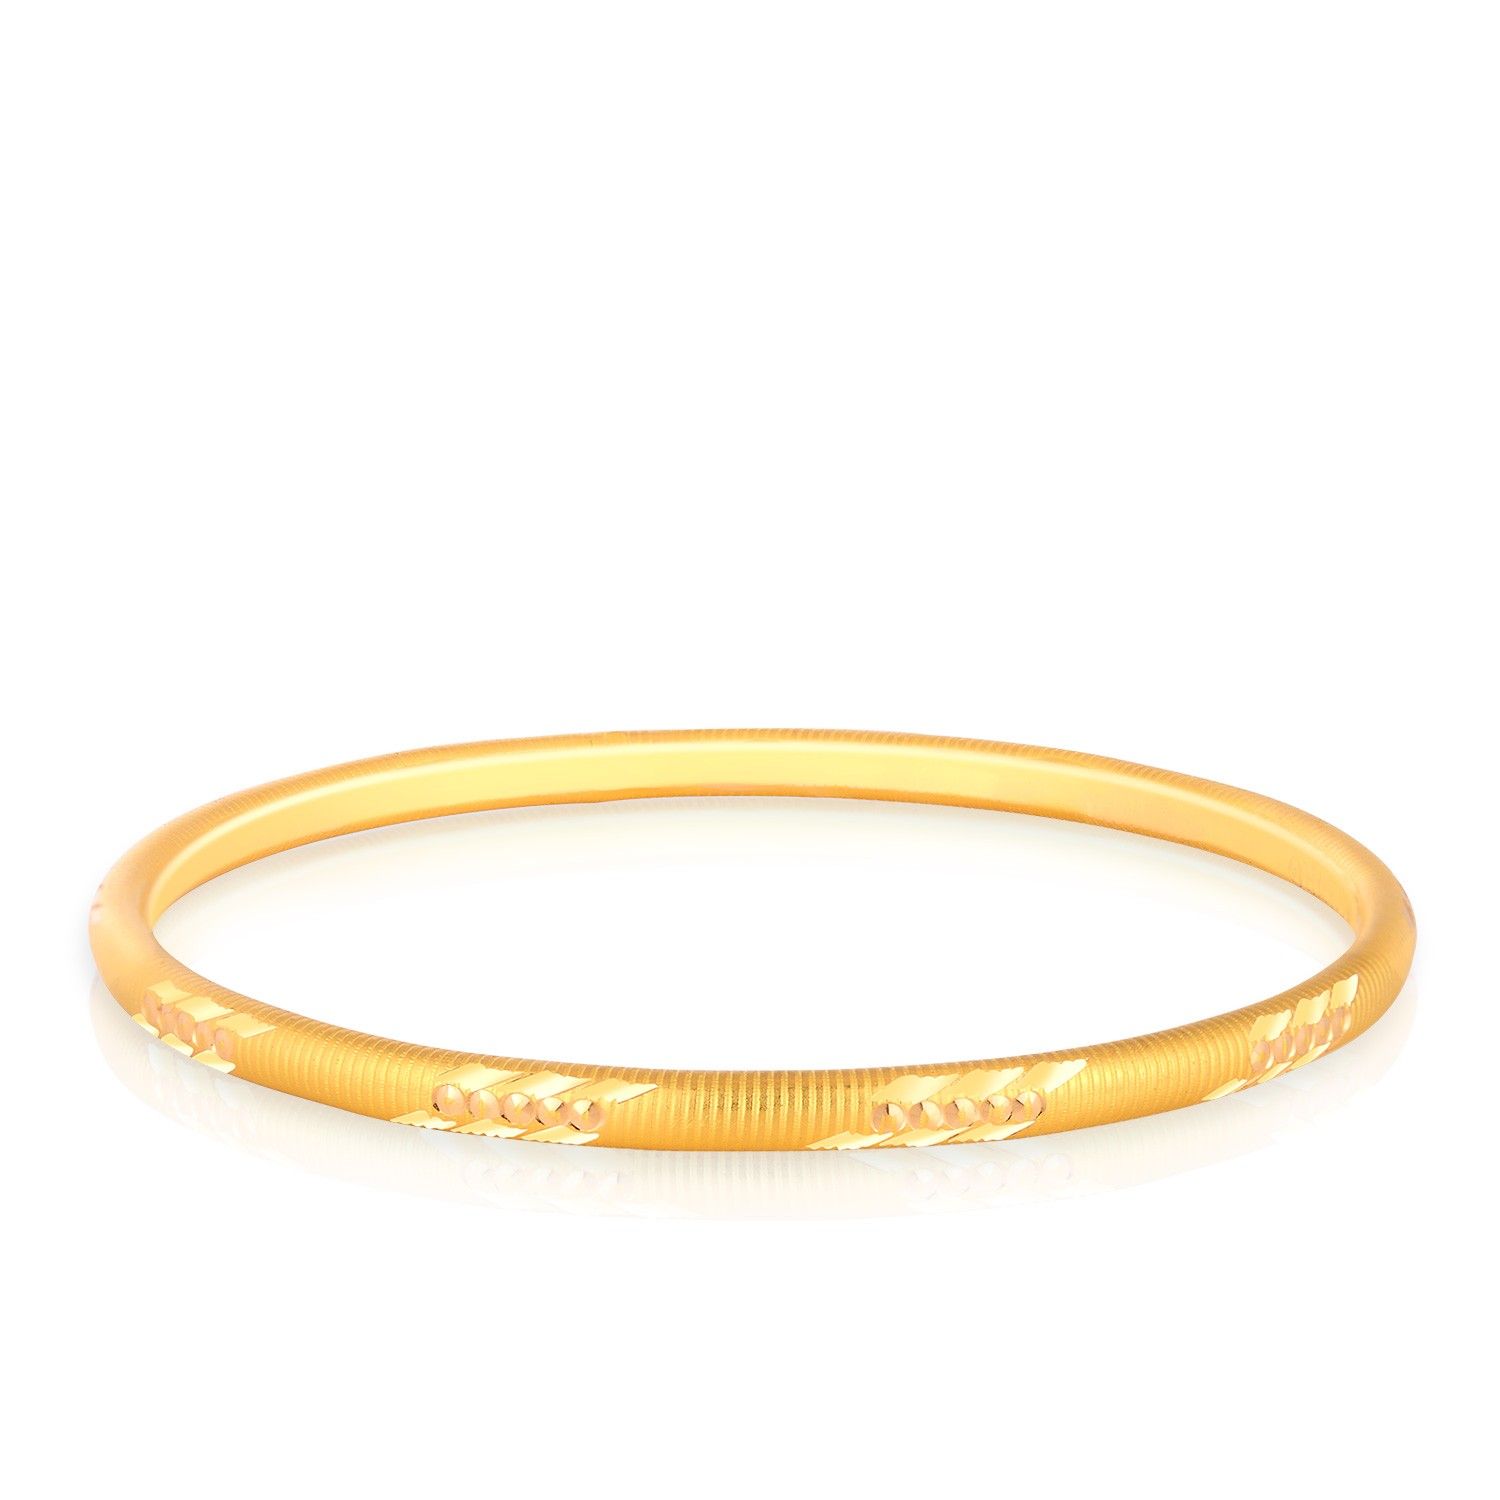 Malabar Gold | Jewelry | Pinterest | Gold, Bangle and Gold bangles